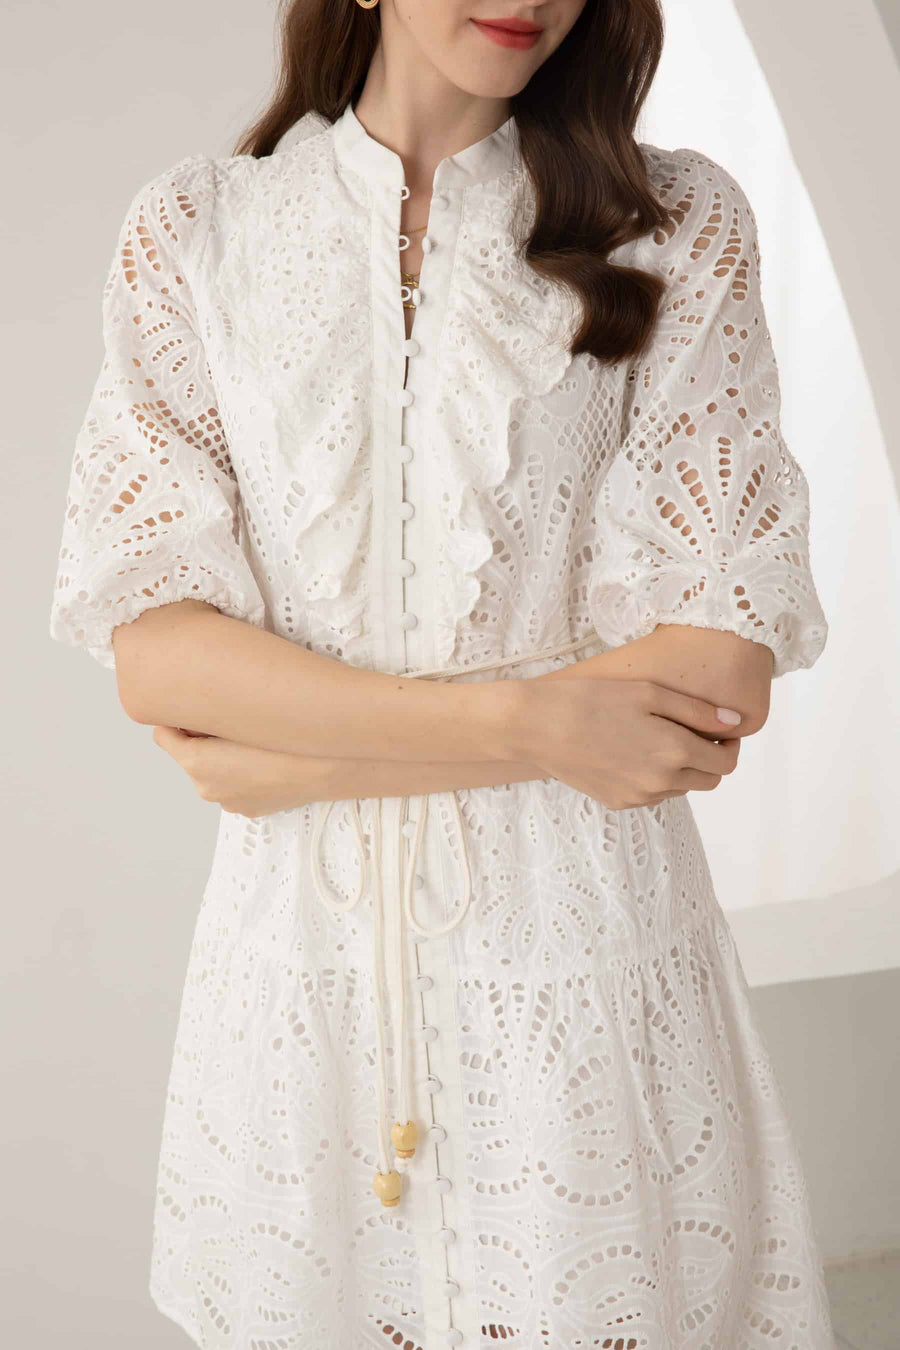 GDS Margot Embroidered Short Dress | White DRESSES 10 12 14 16 8 GDS L M S WHITE XL XS